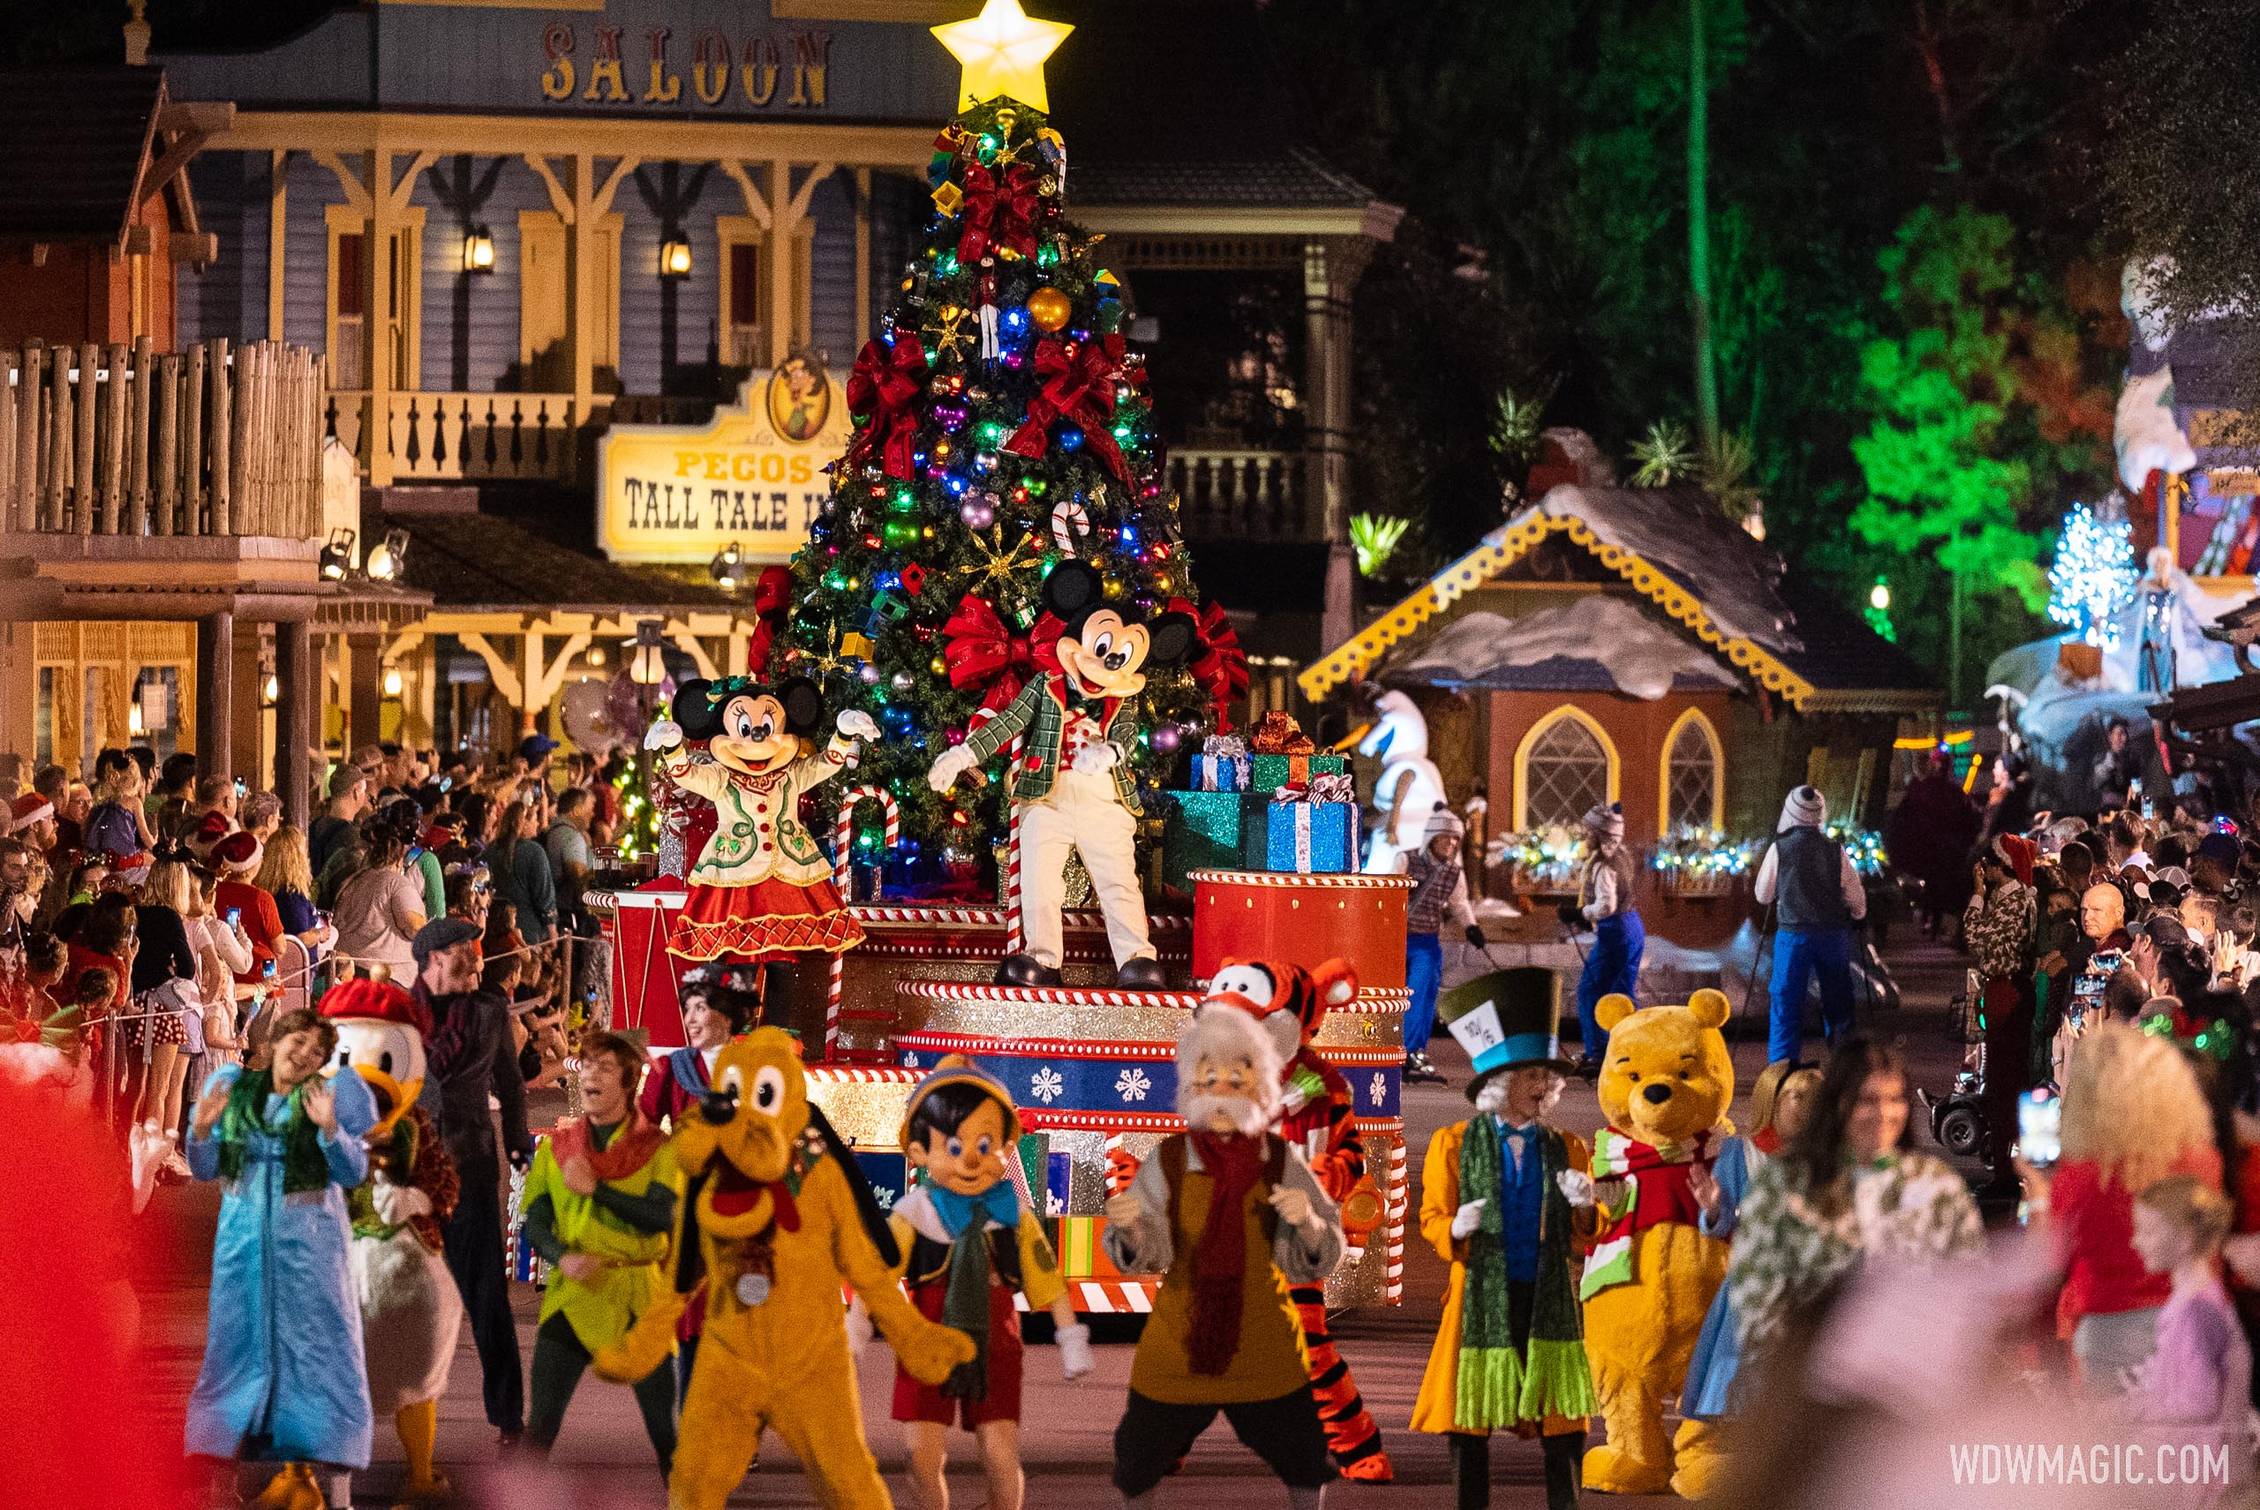 Mickeys-Once-Upon-a-Christmastime-Parade_Full_49522.jpg